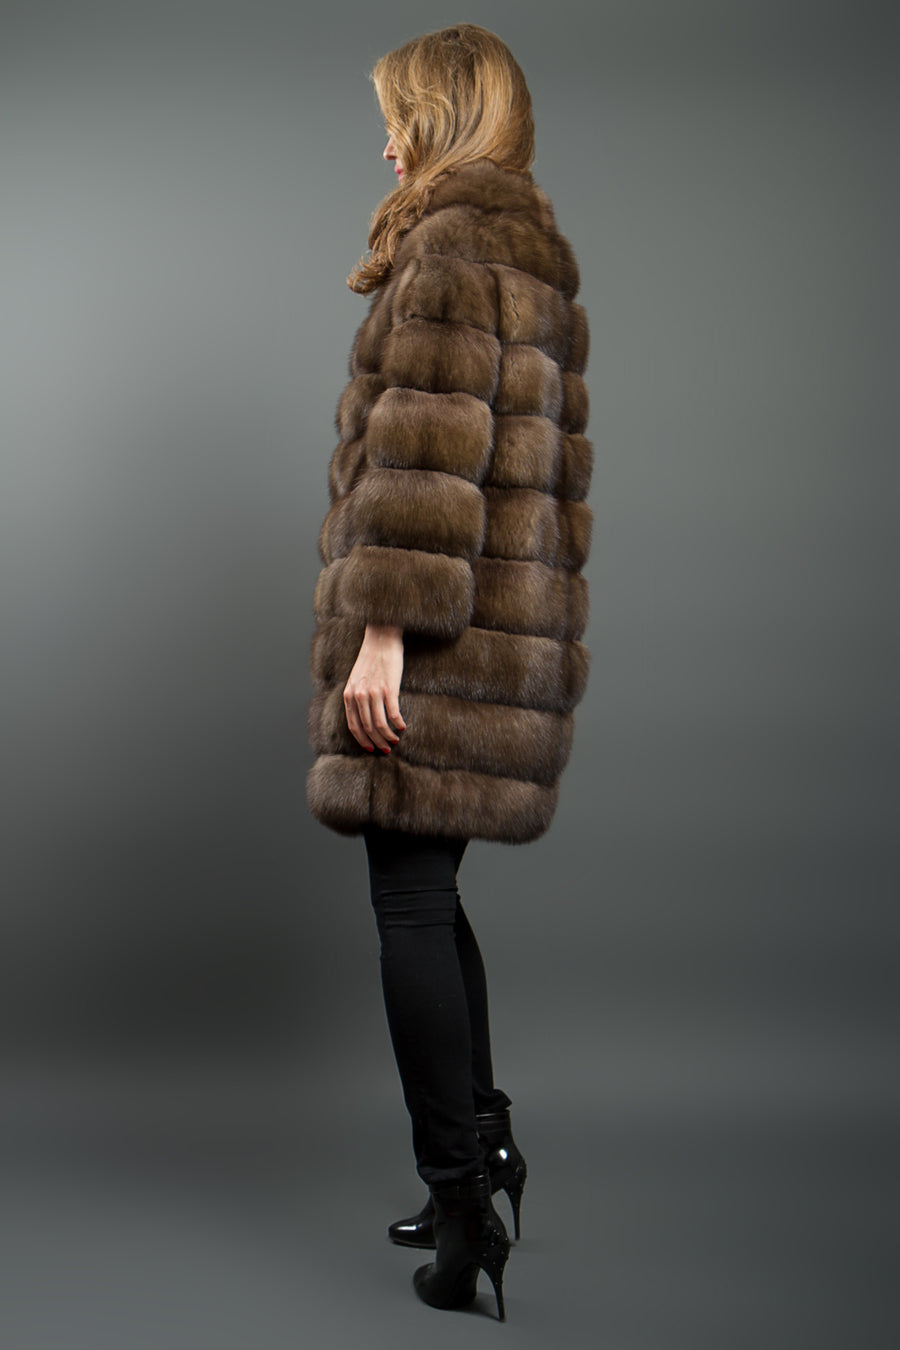 Russian Sable Fur Coat